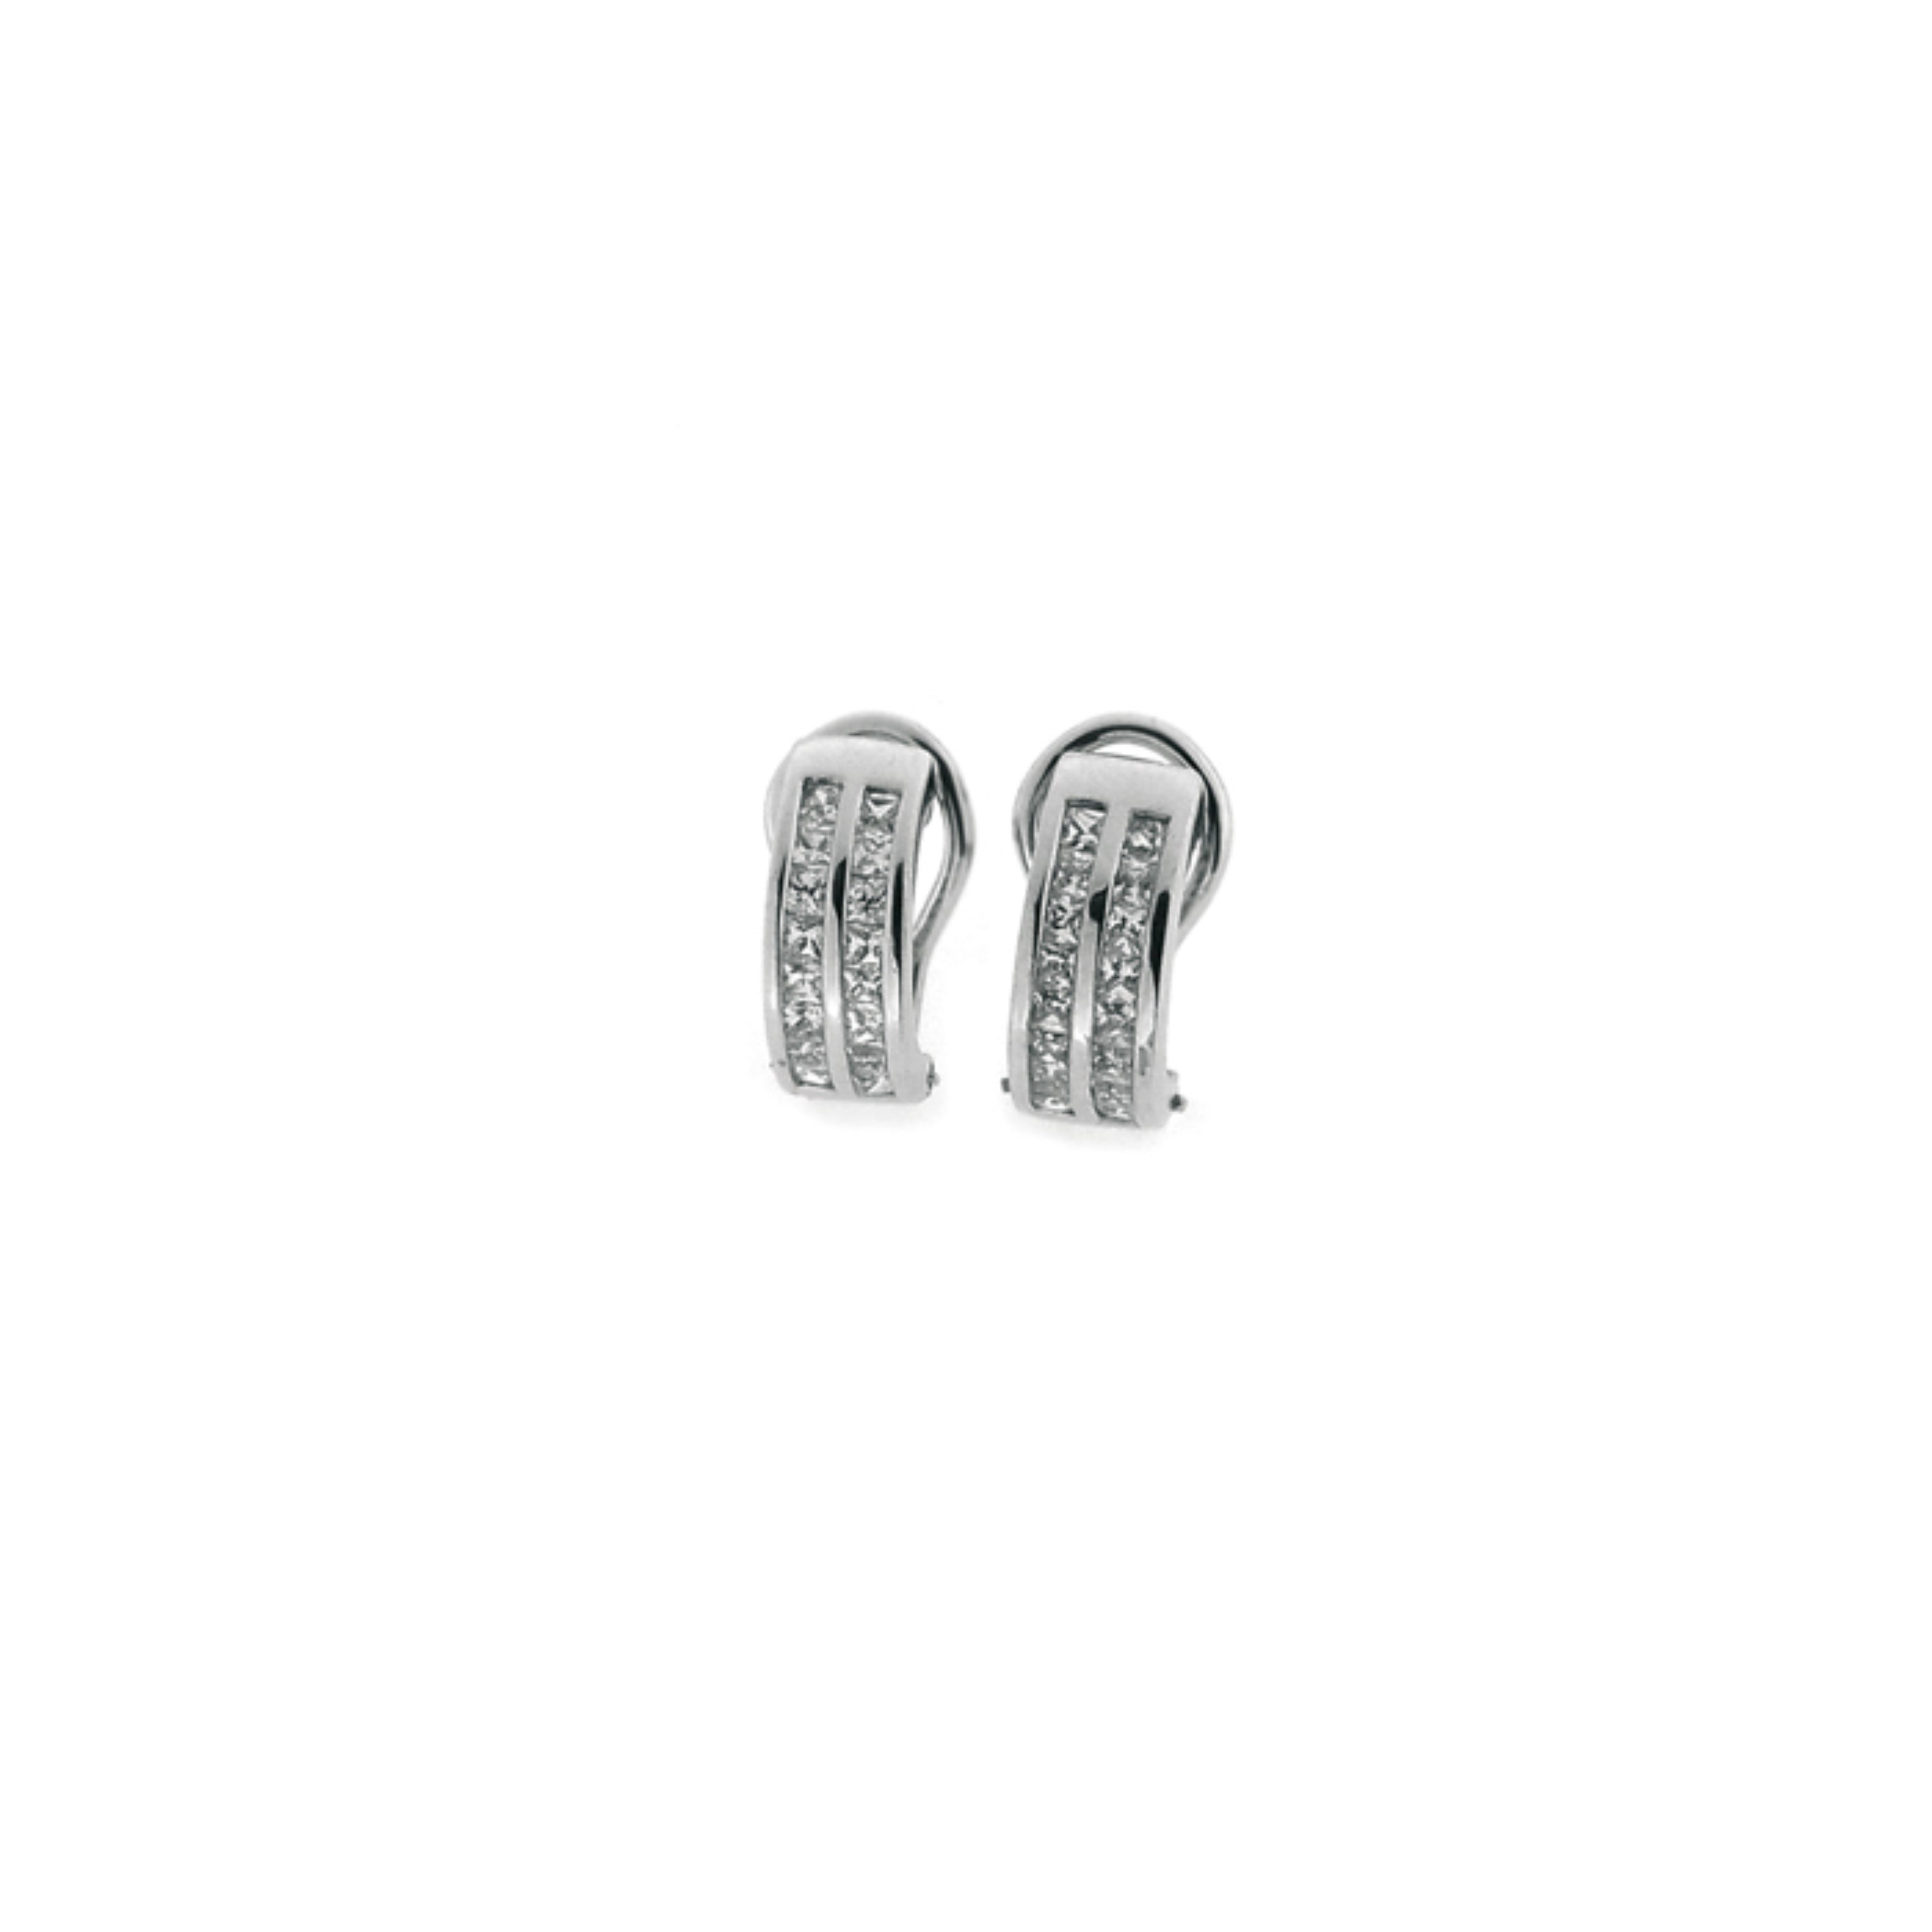 Paralell Earrings 925 Sterling Silver